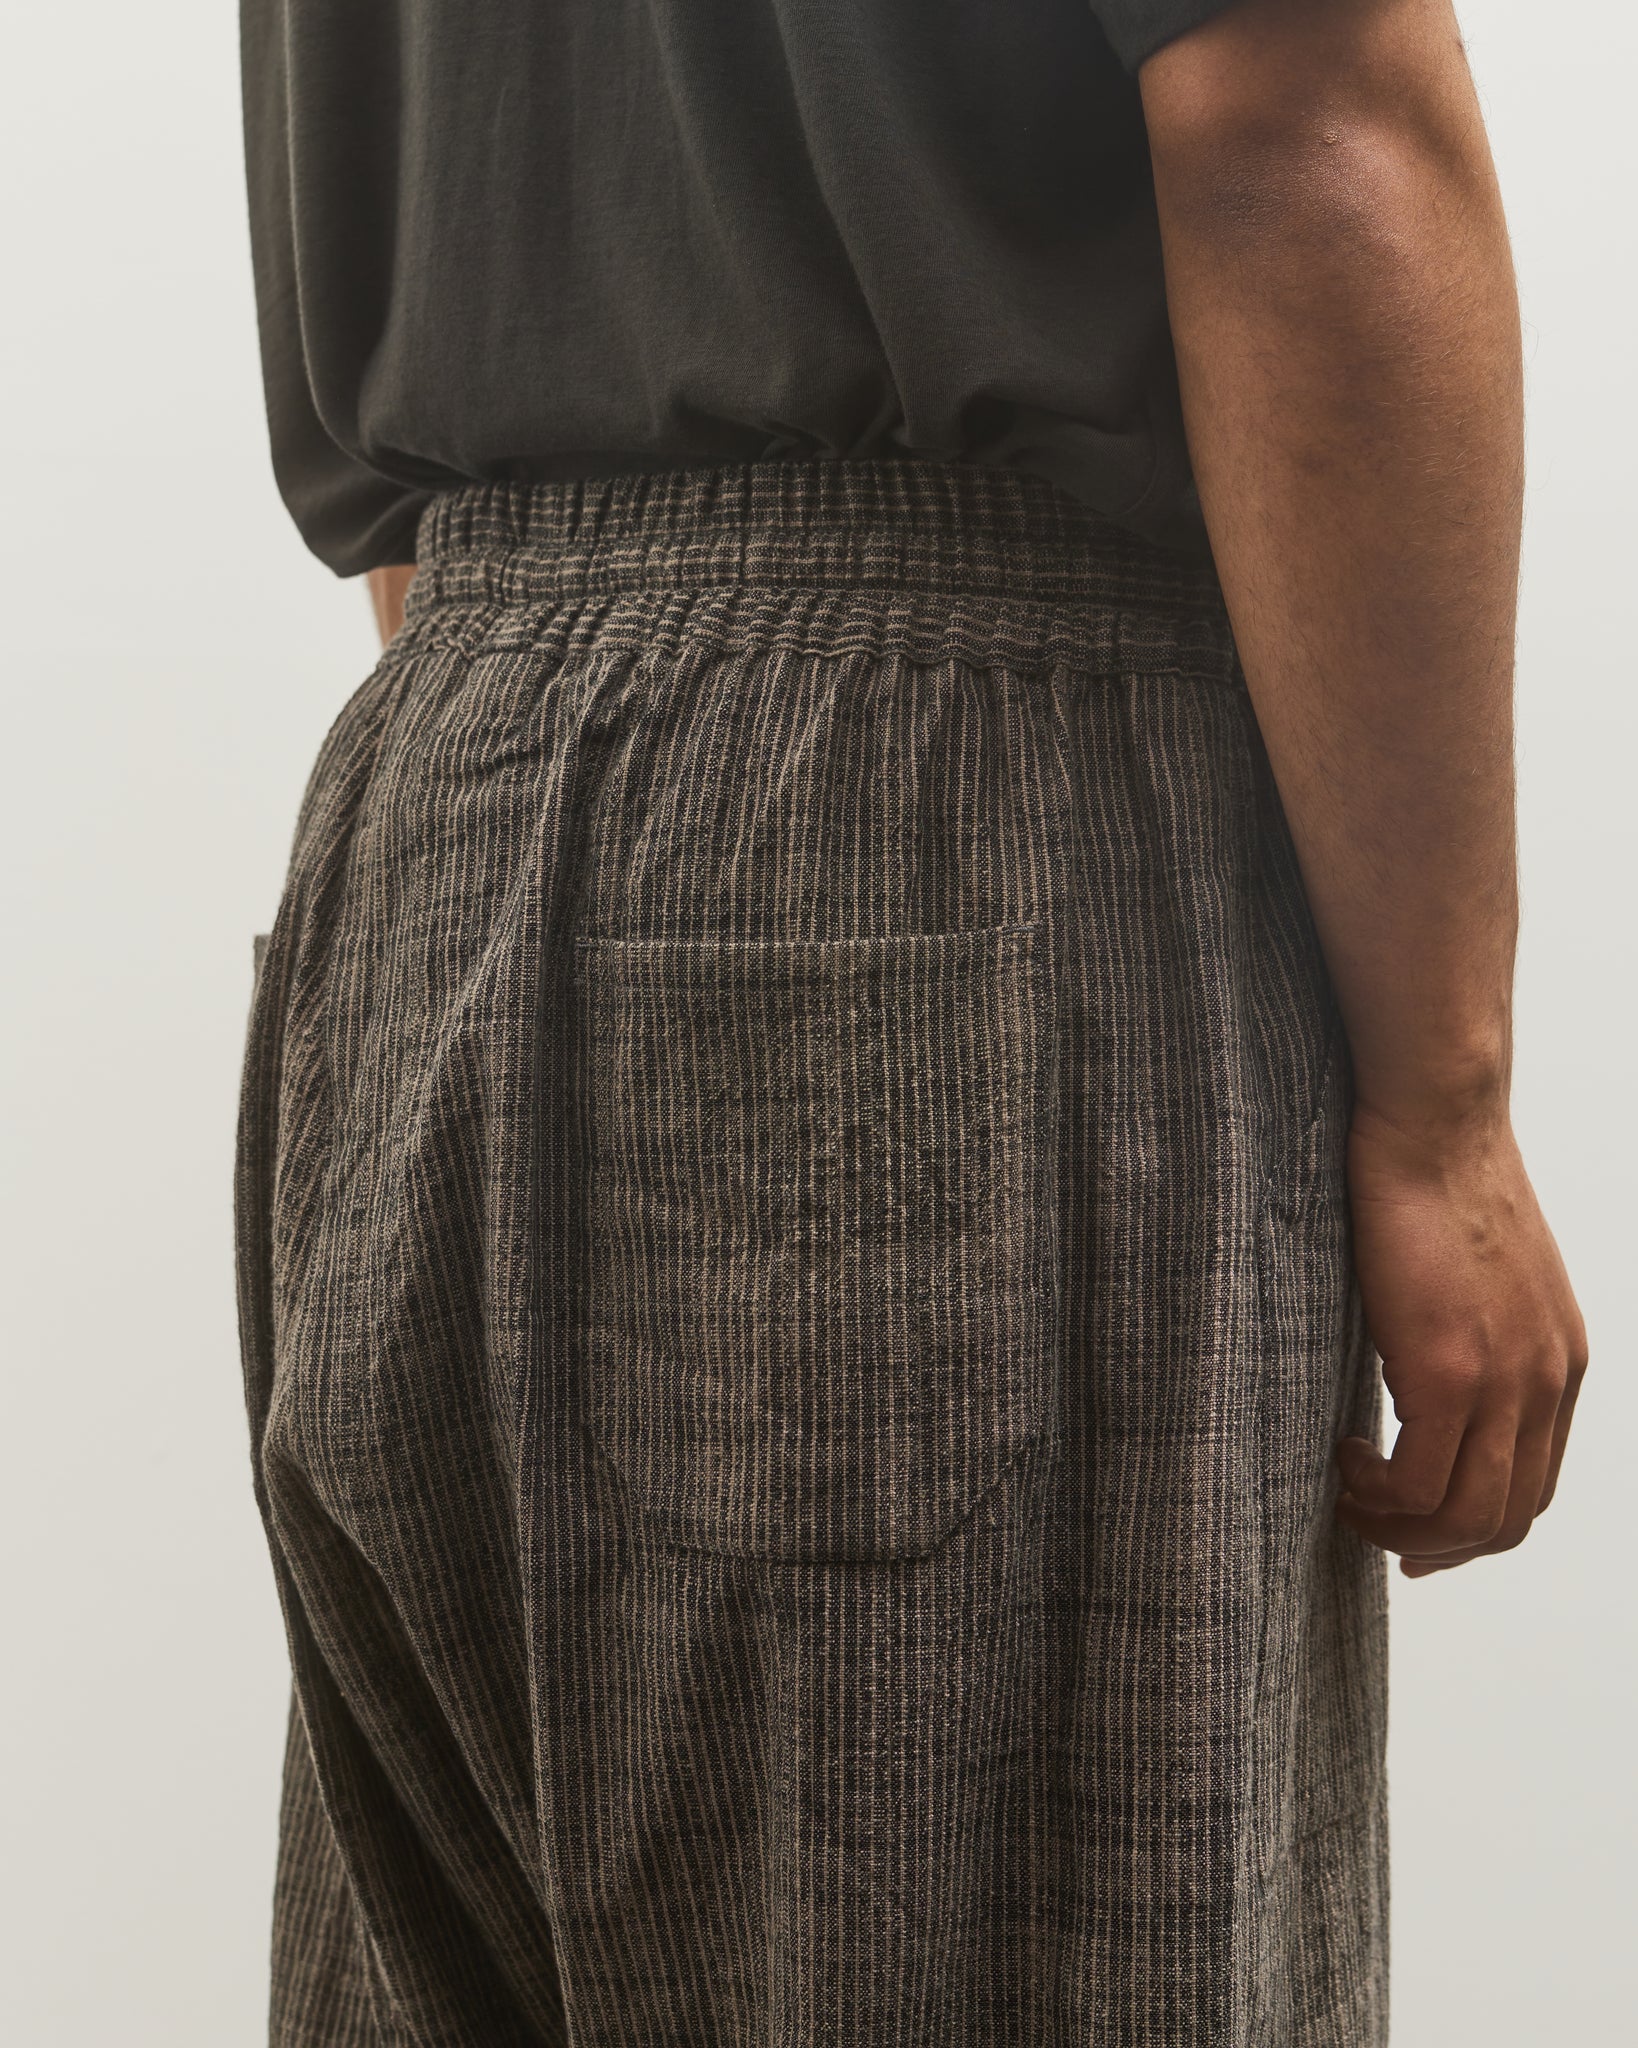 Jan-Jan Van Essche Trousers #80, Vintage Stripe